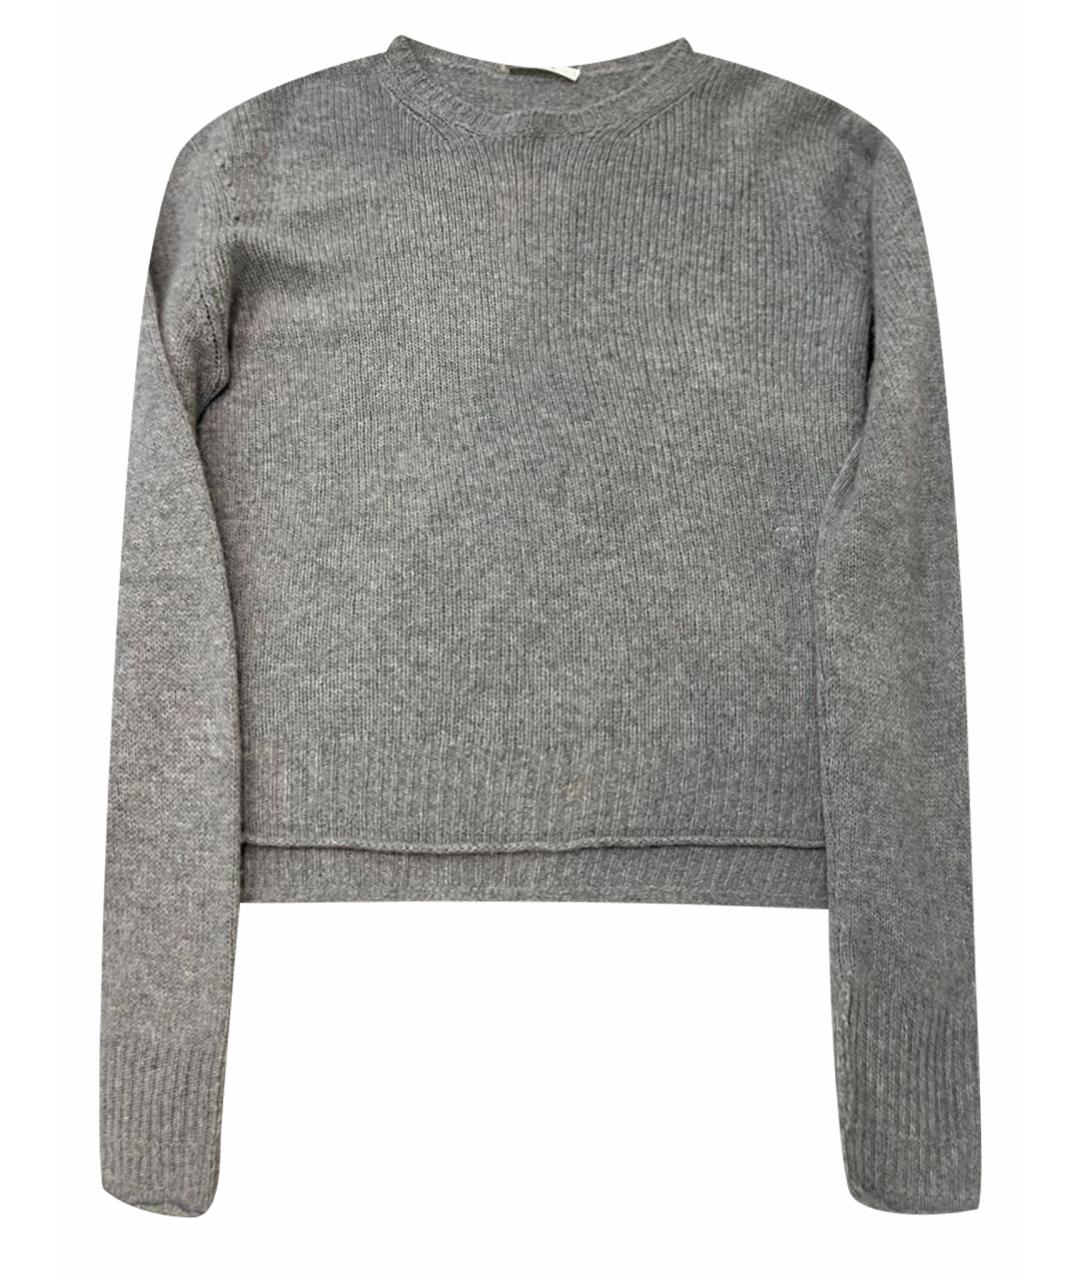 CELINE PRE-OWNED Серый кашемировый джемпер / свитер, фото 1